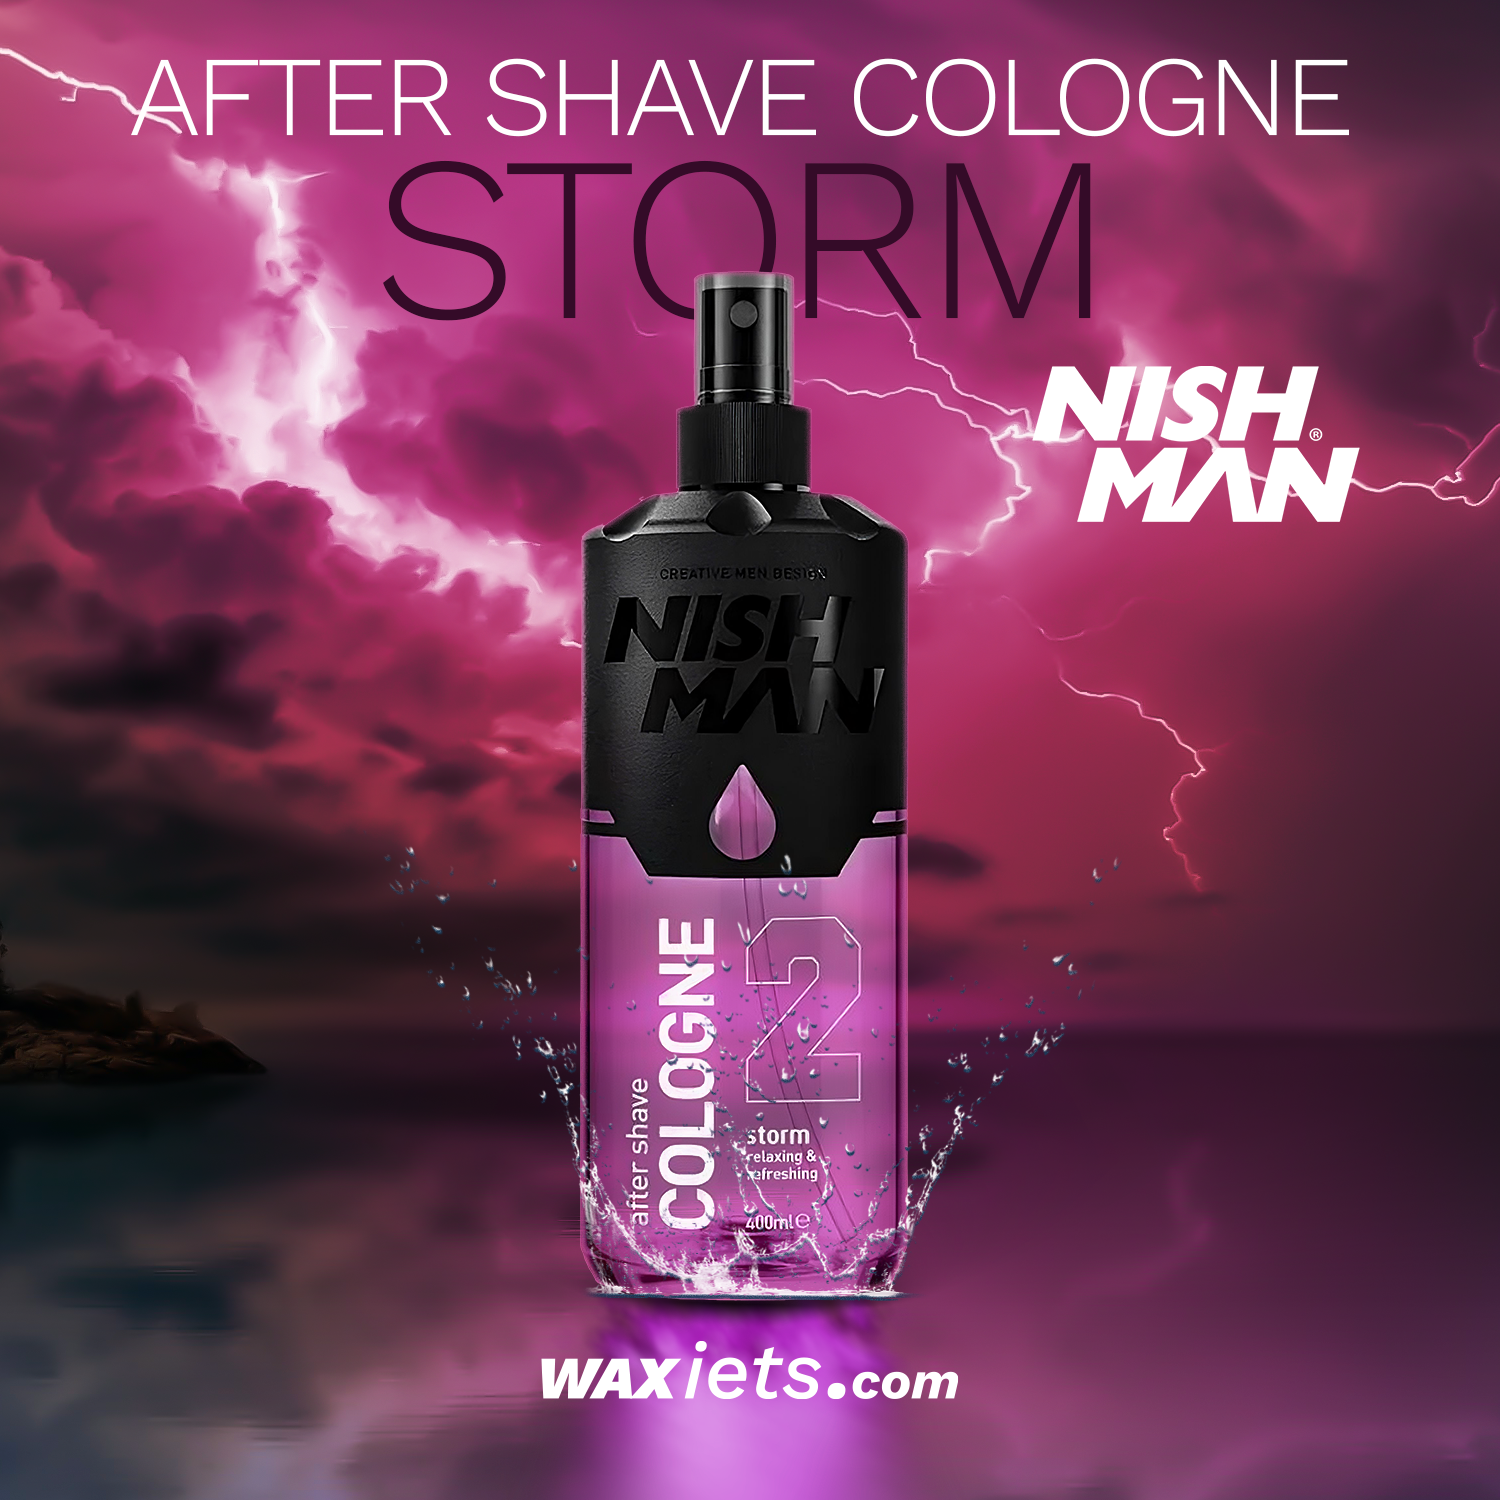 NISH MAN – After Shave Cologne Storm 2 – 400ml